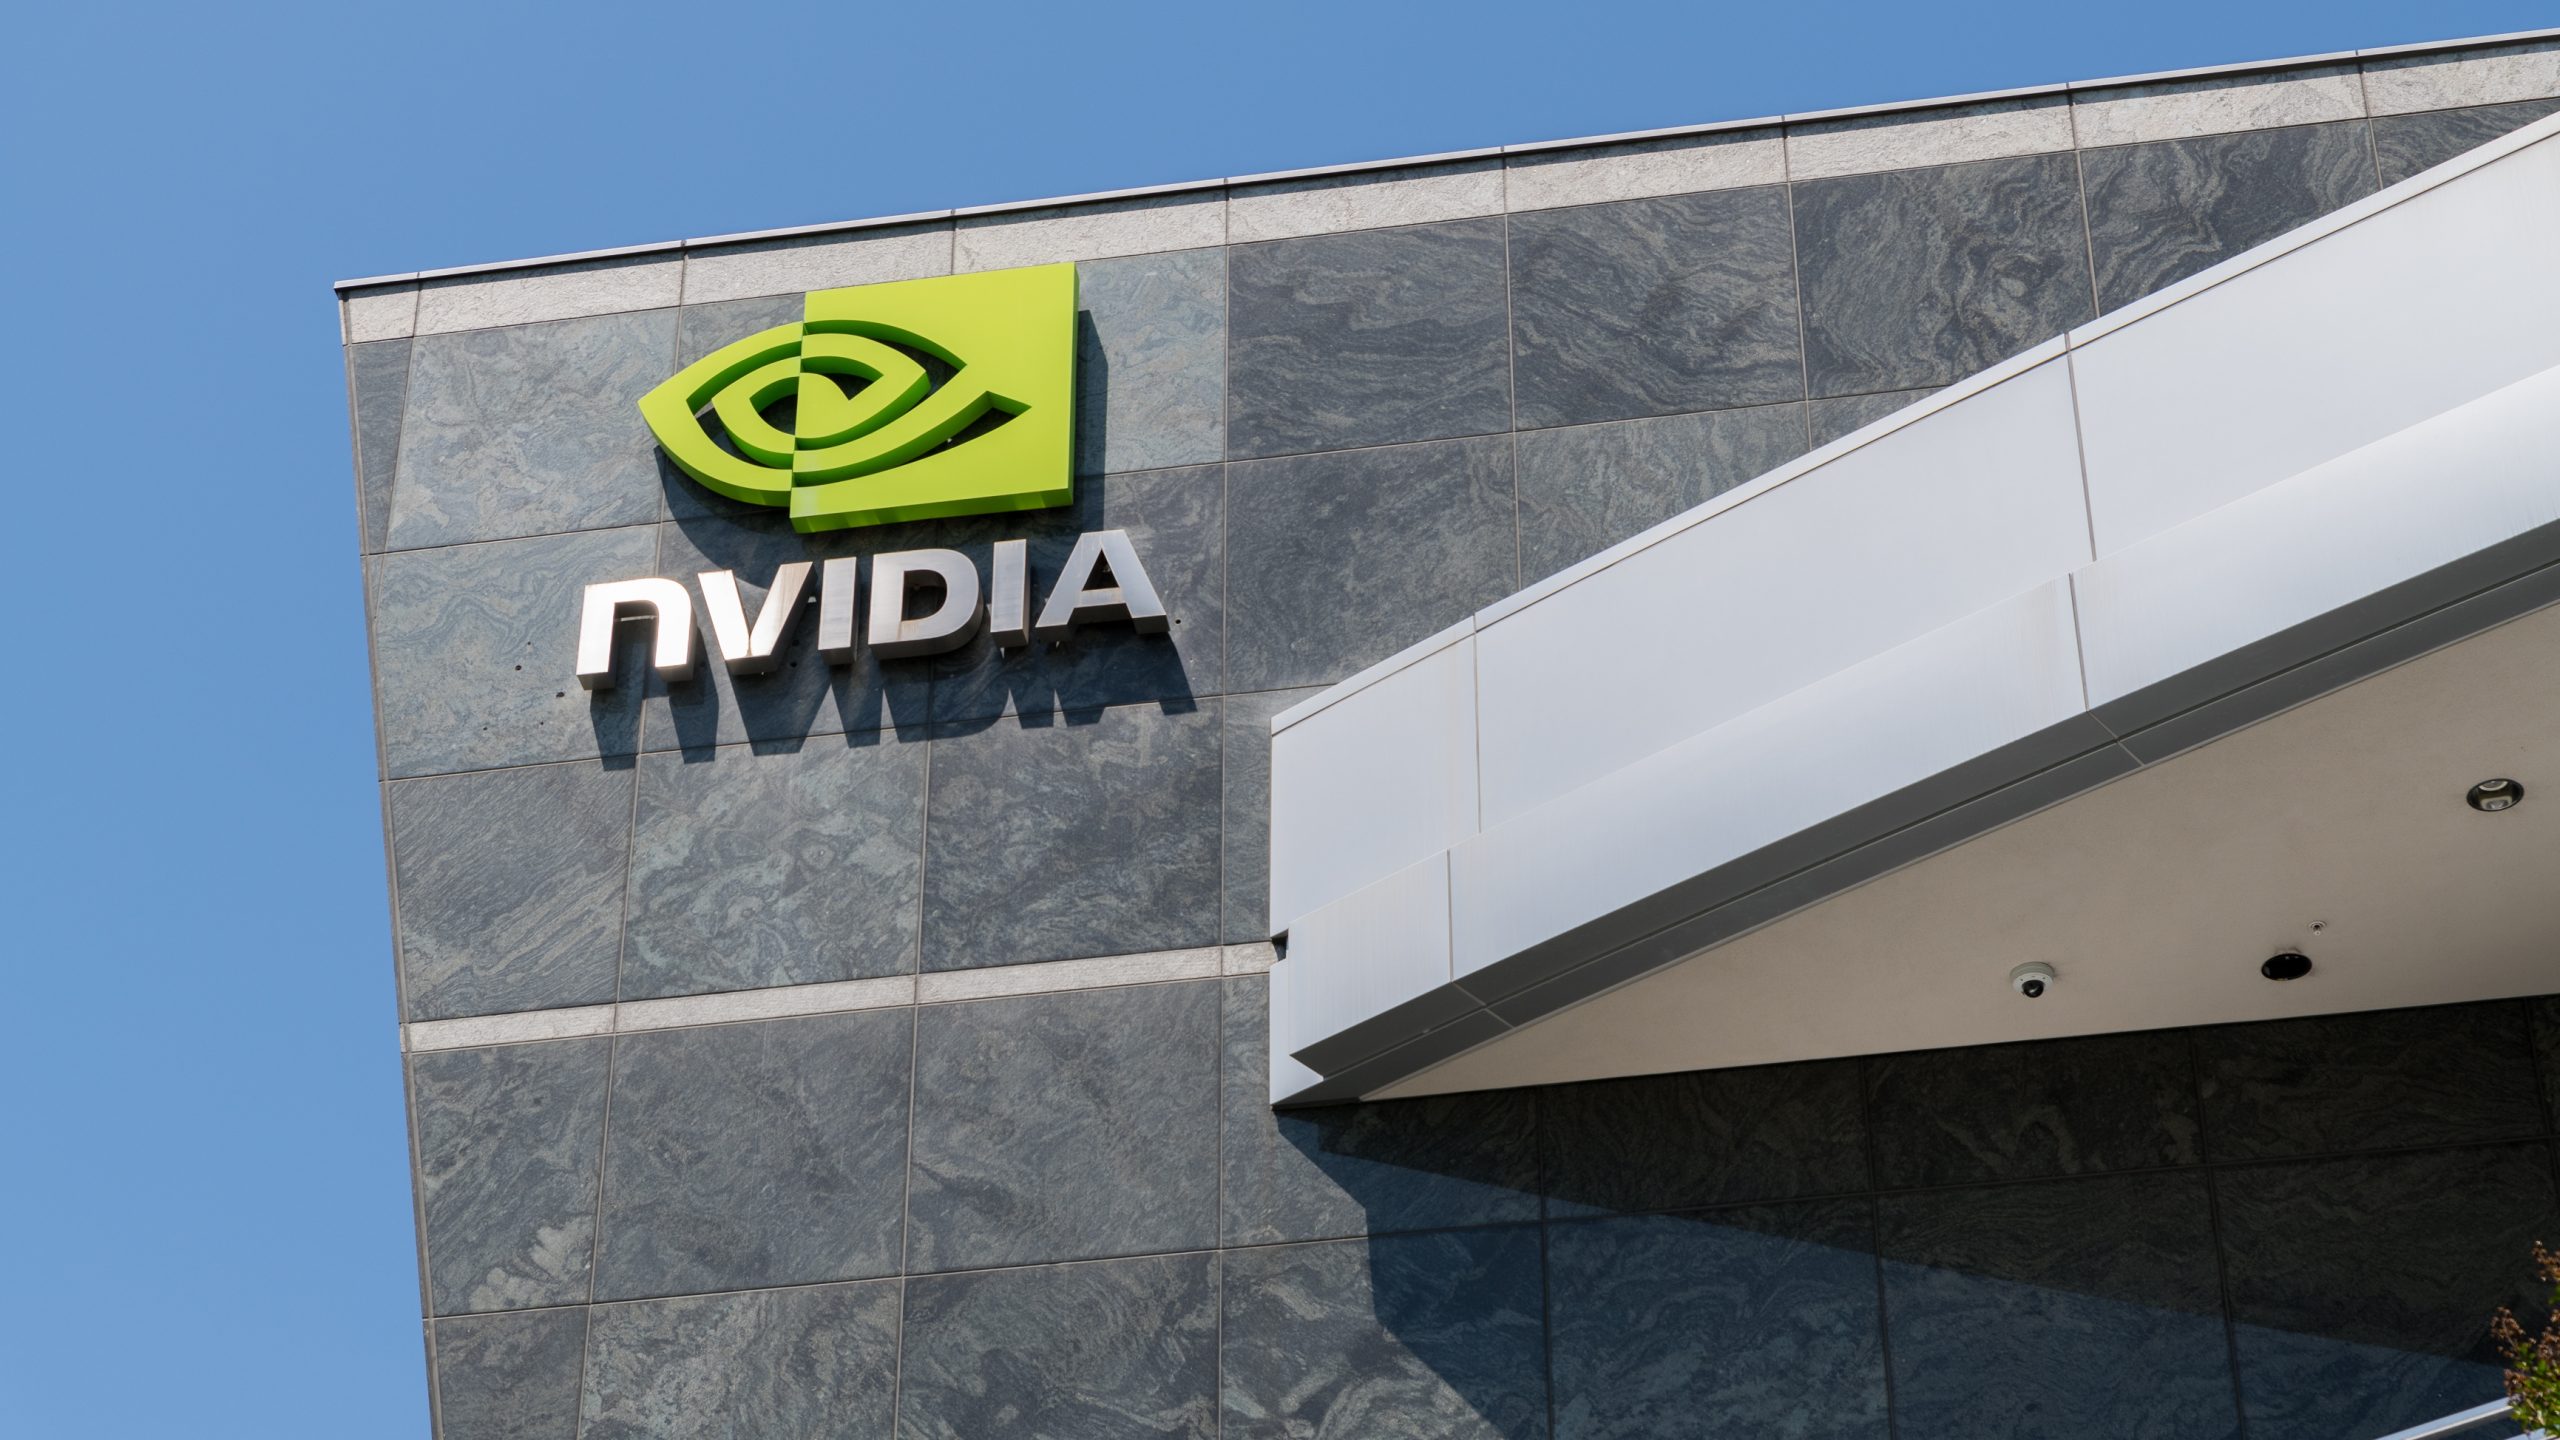 Nvidia Geforce Drivers အသစ်များသည် Elden Ring နှင့် Rtx 3080 Ti လက်ပ်တော့များအတွက် လမ်းခင်းပေးသည်။